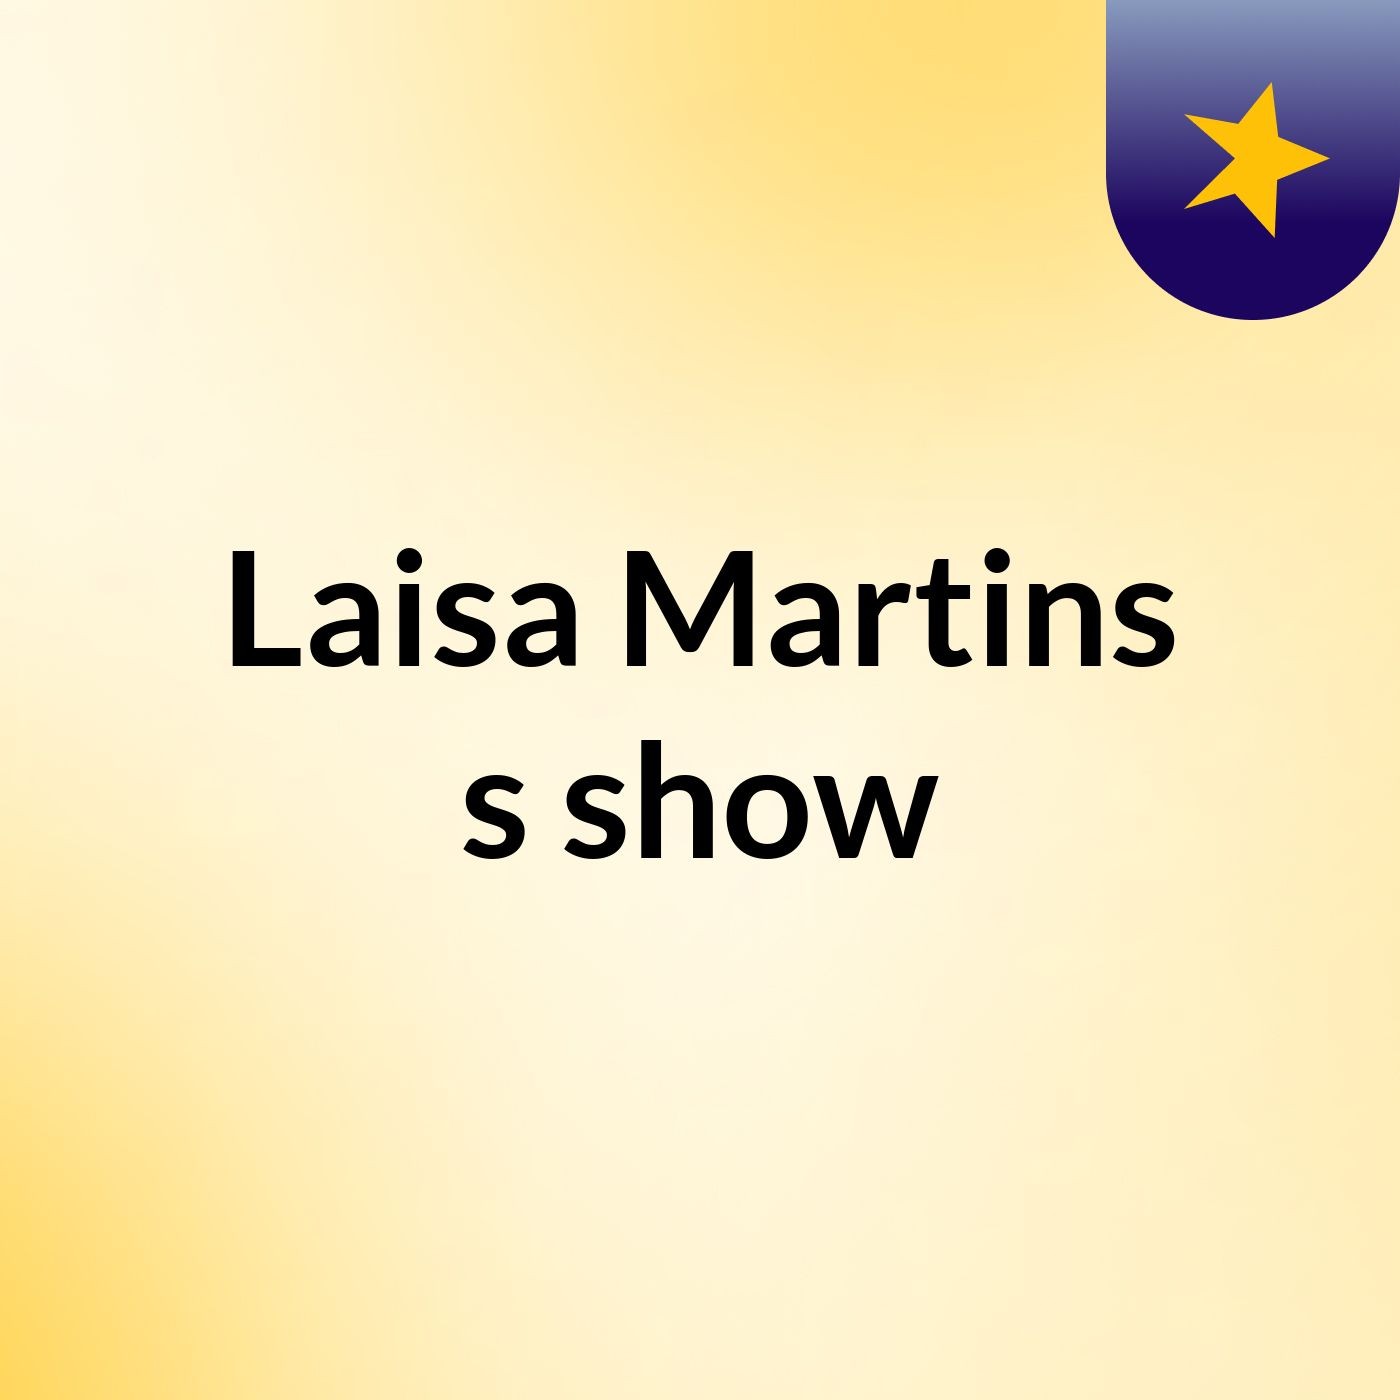 Laisa Martins's show